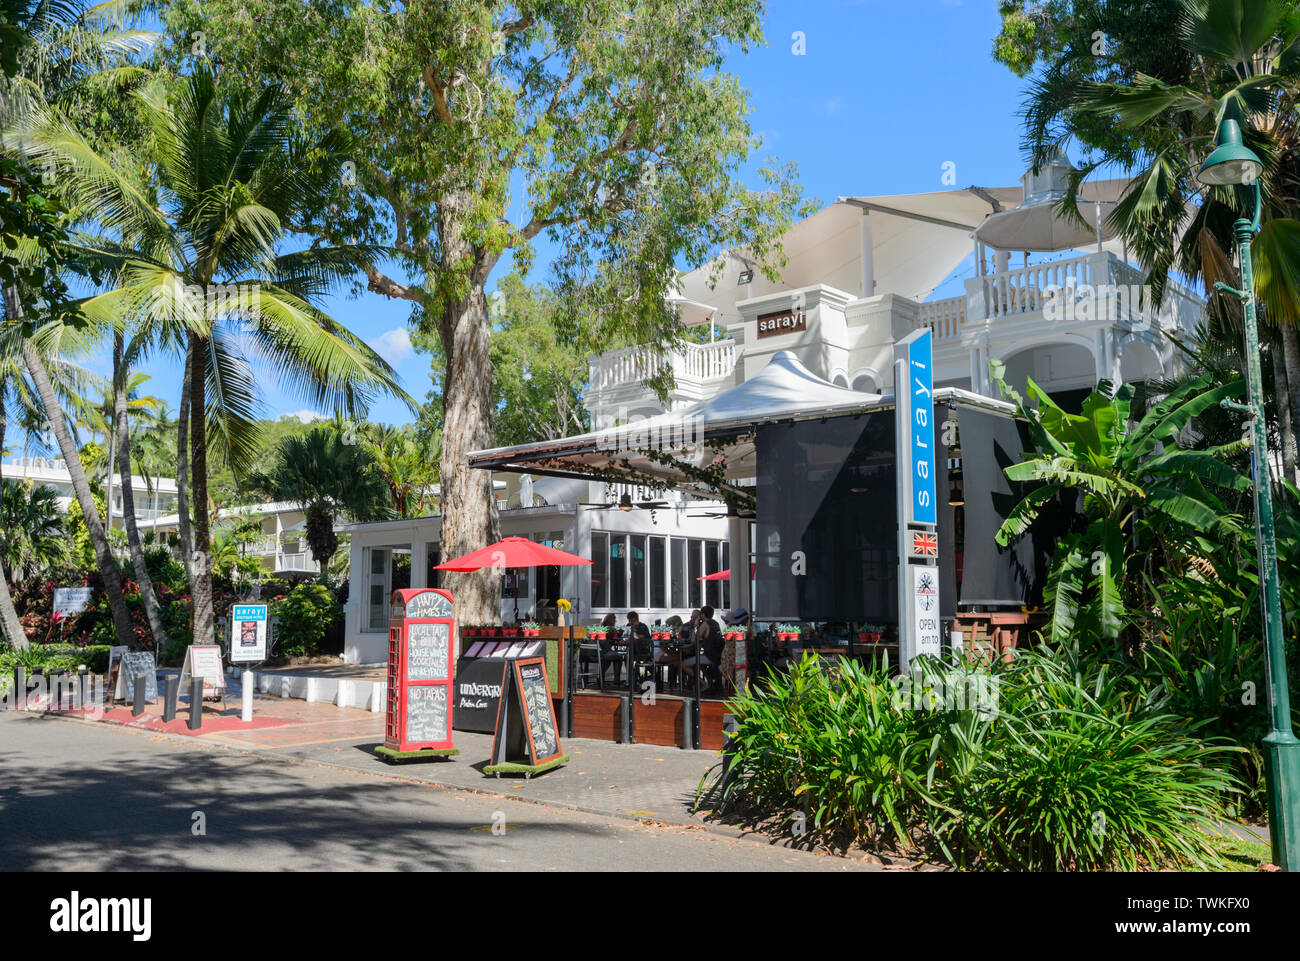 Vista de Sarayi Restaurante en Palm Cove, playas del norte de Cairns, Far North Queensland, FNQ, Queensland, Australia Foto de stock